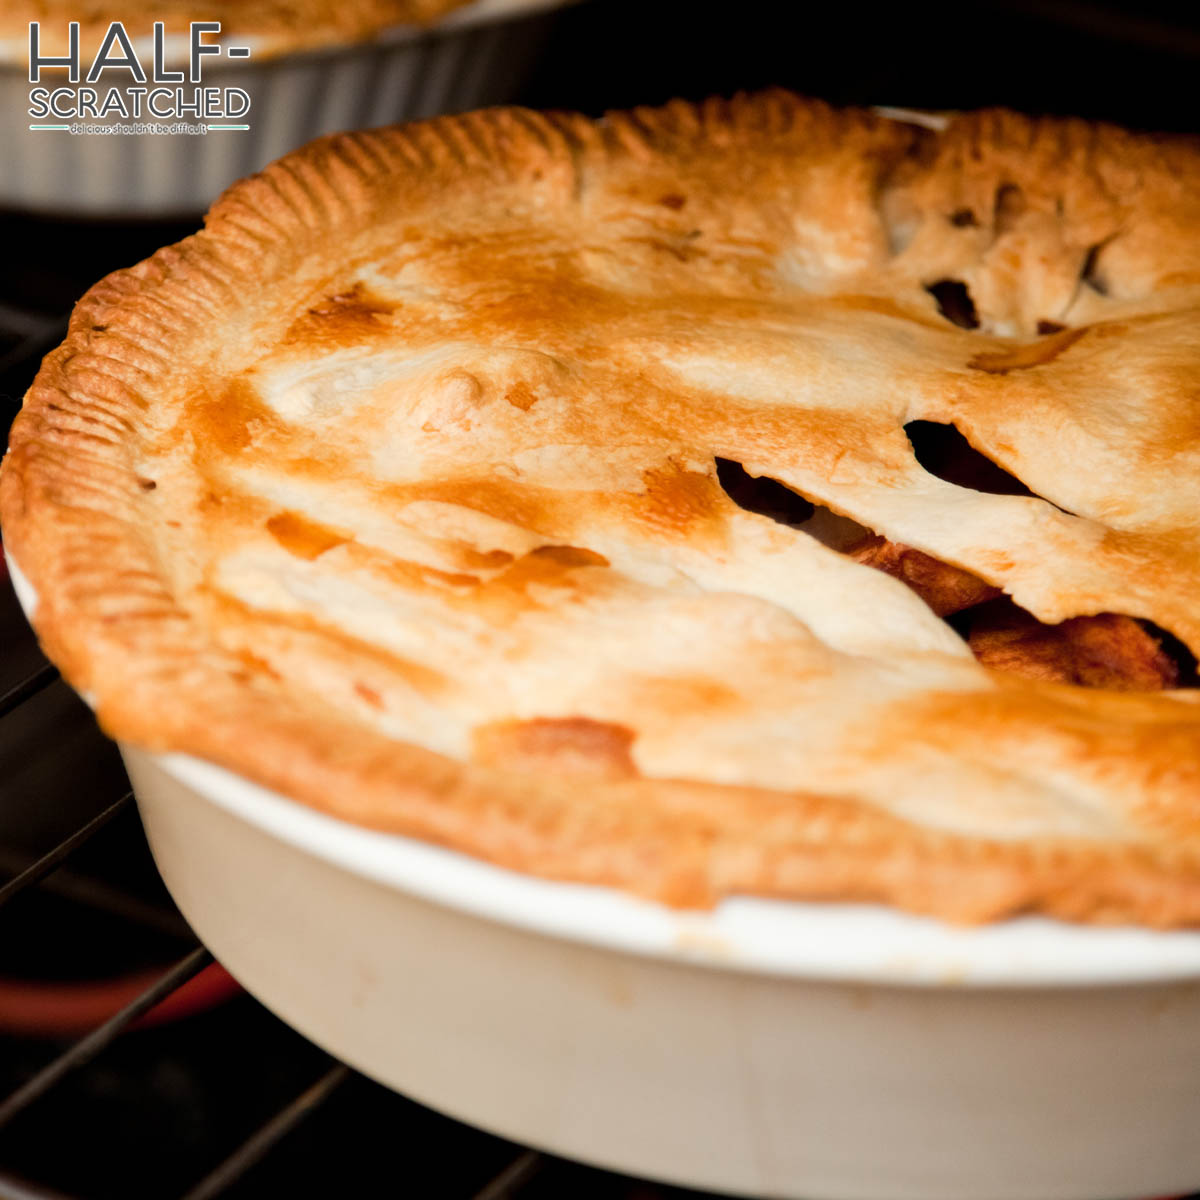 Apple pie in the oven